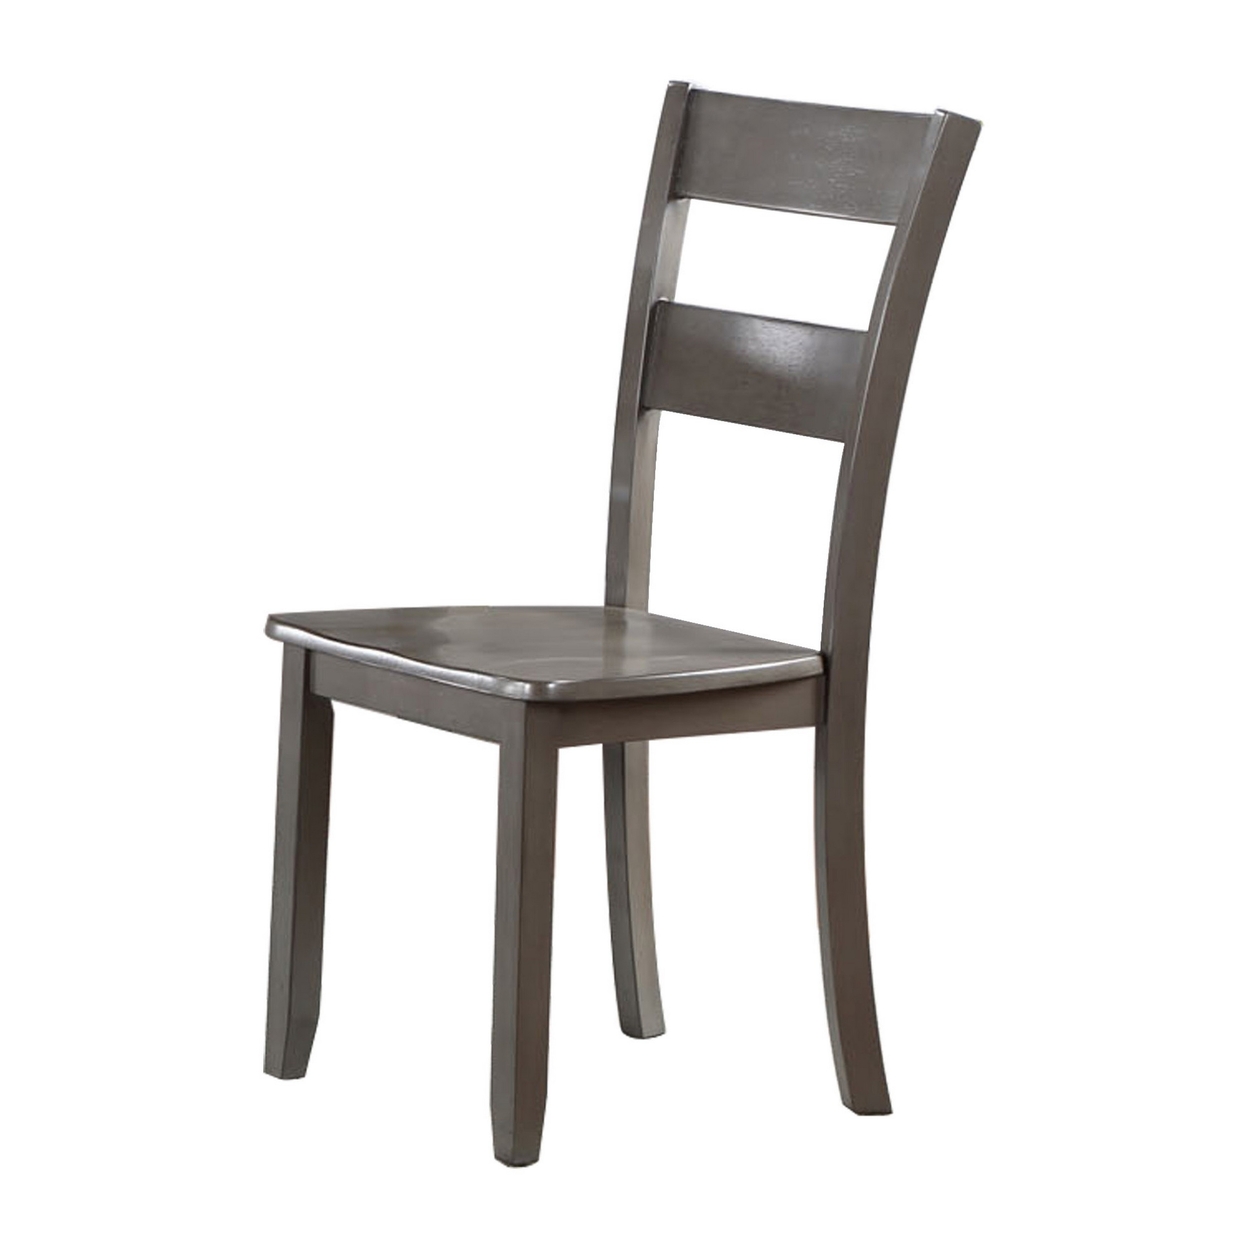 Kate 22 Inch Dining Side Chair Set Of 2, Wood, Slatted Backrest, Brown -Saltoro Sherpi